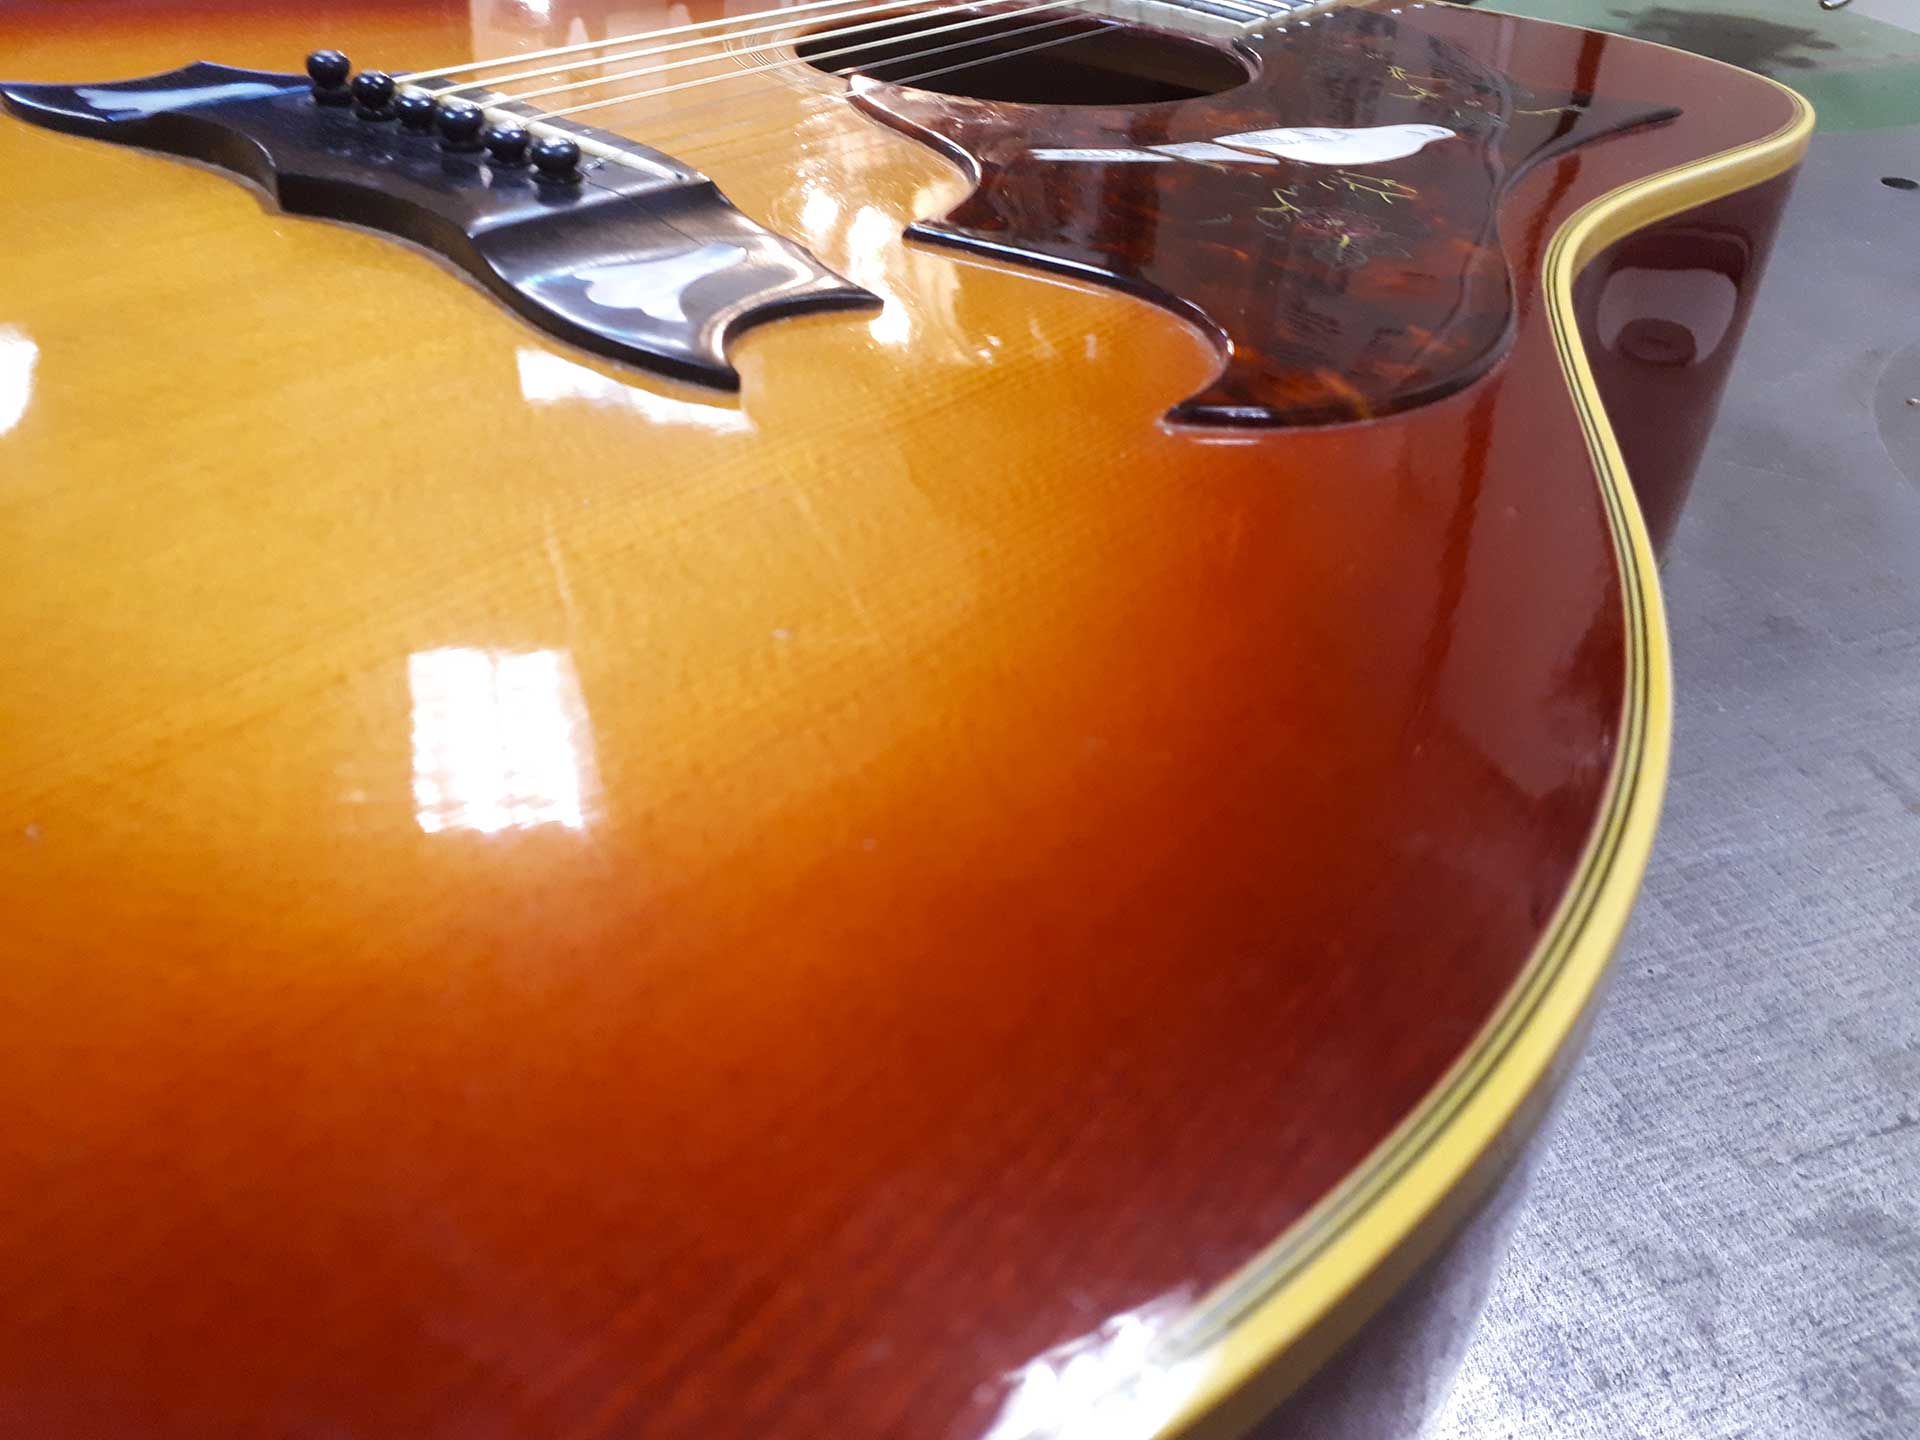 1973 Gibson Dove Saddle fretting and setting